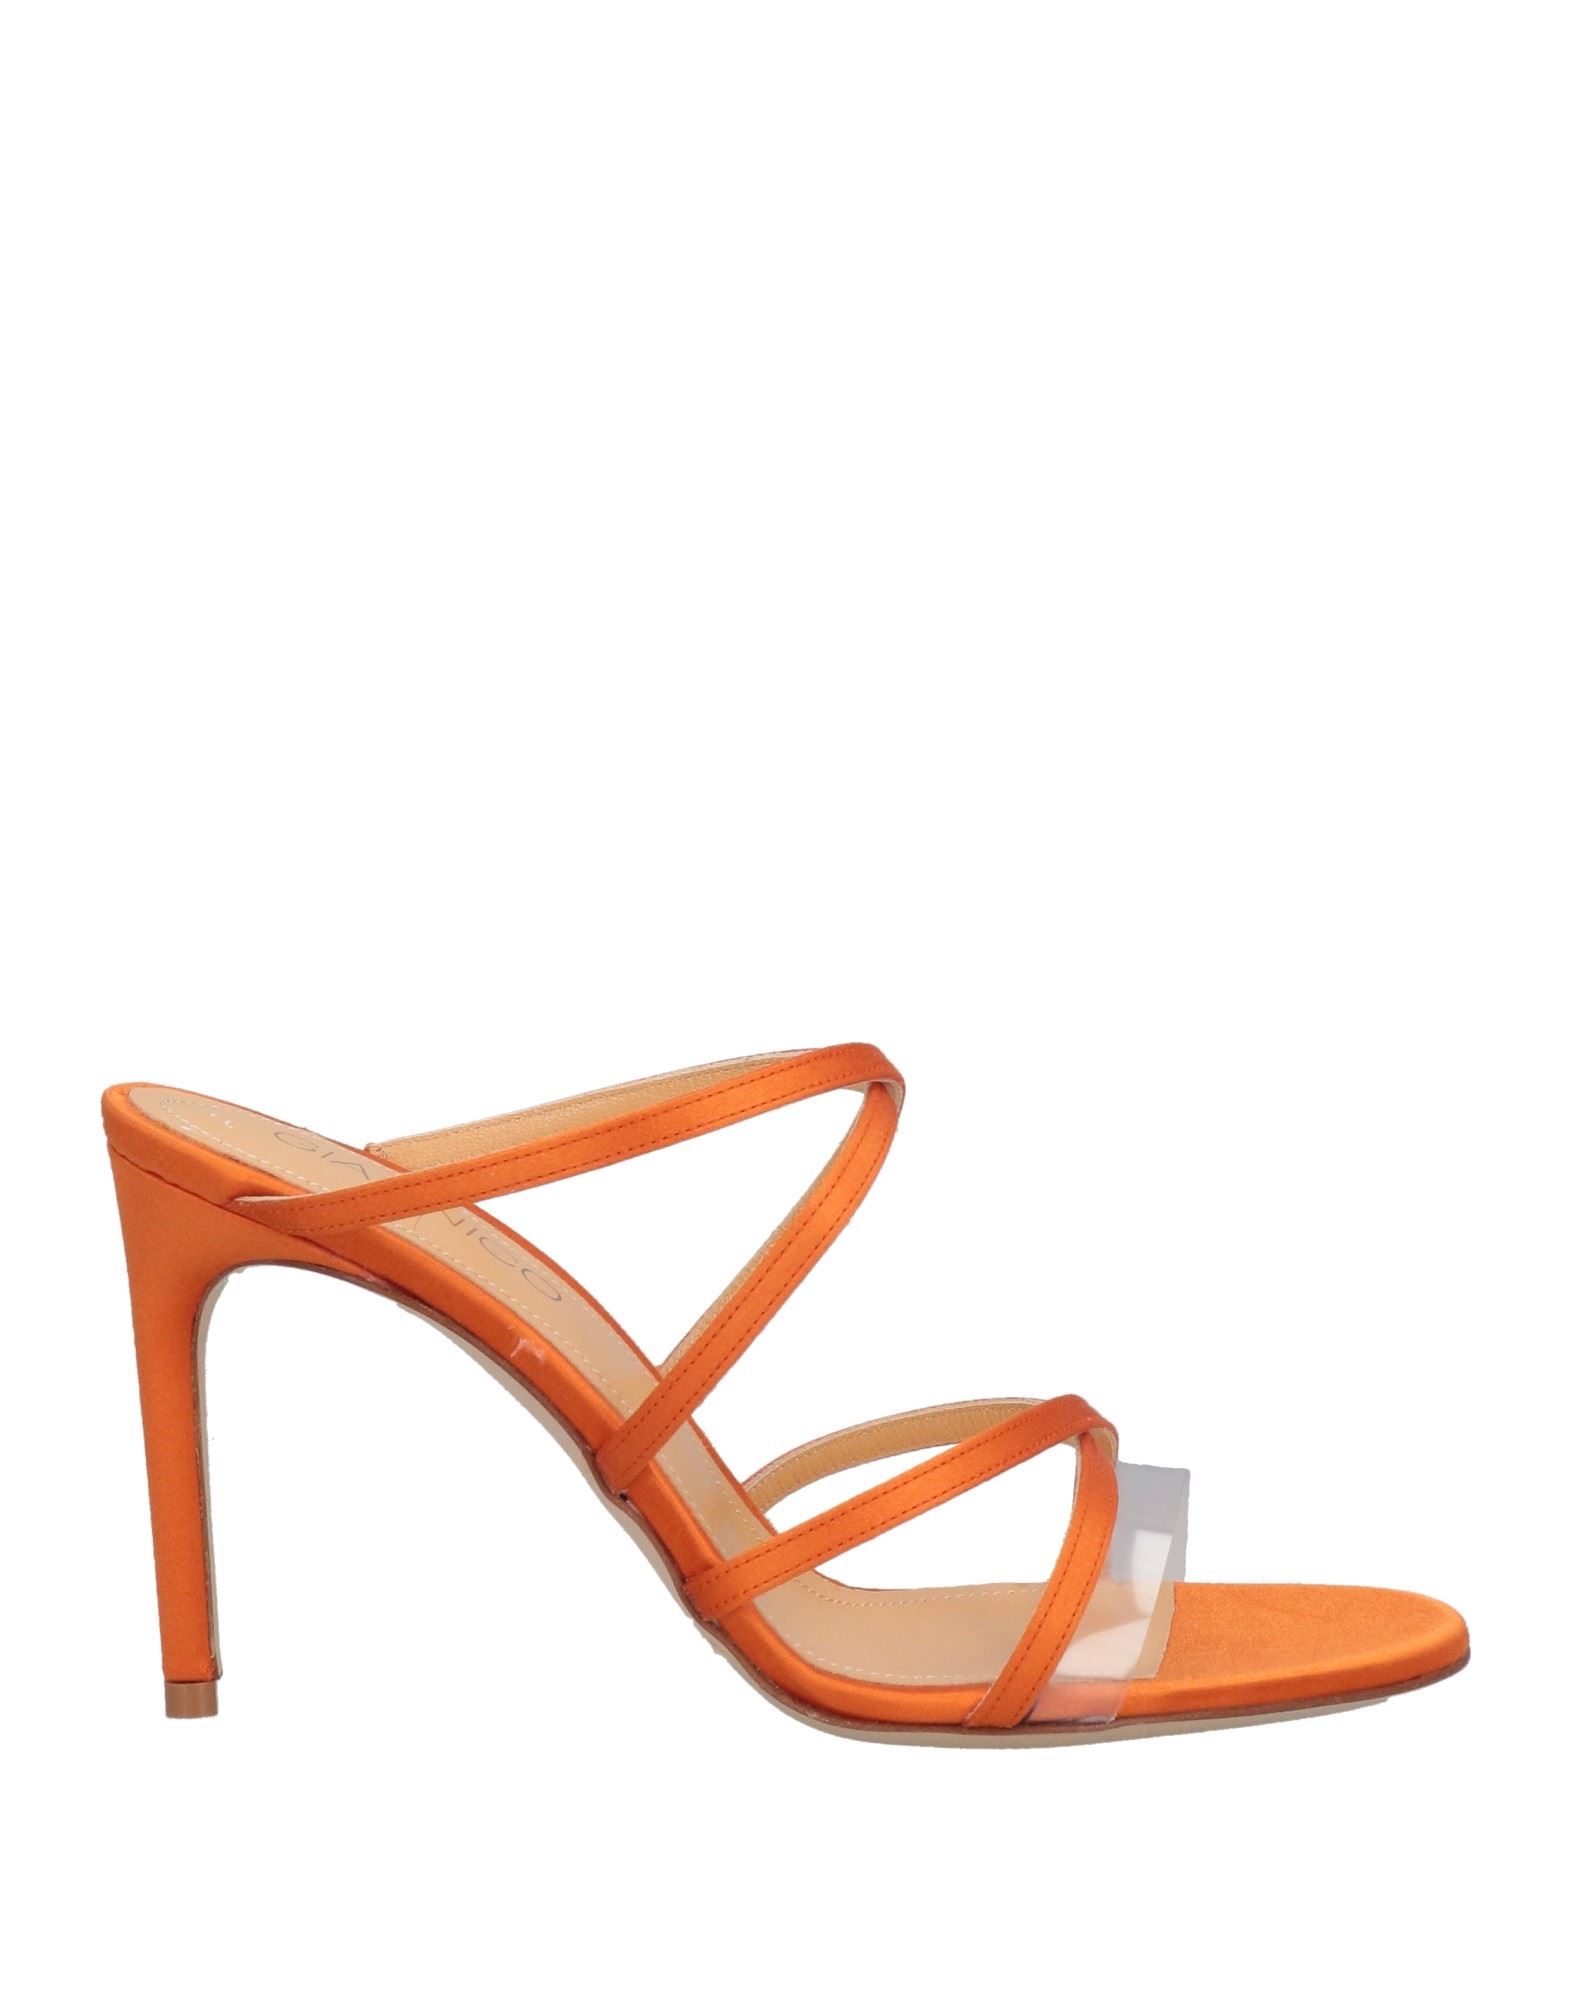 Giannico Sandals In Orange